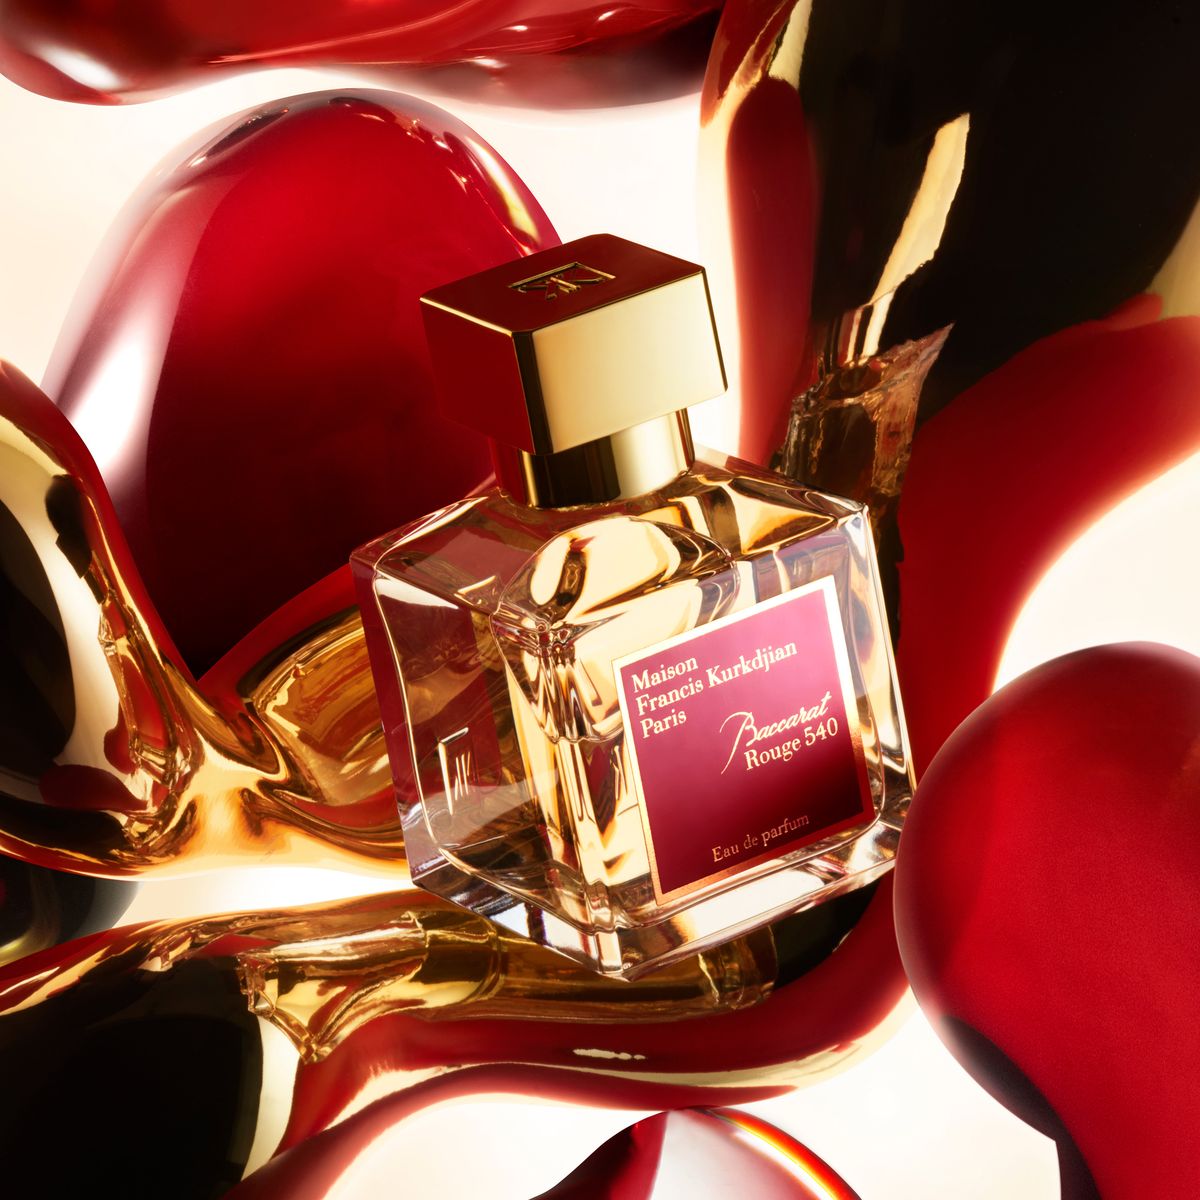 Maison Francis Kurkdjian Baccarat Rouge 450 Perfume Review